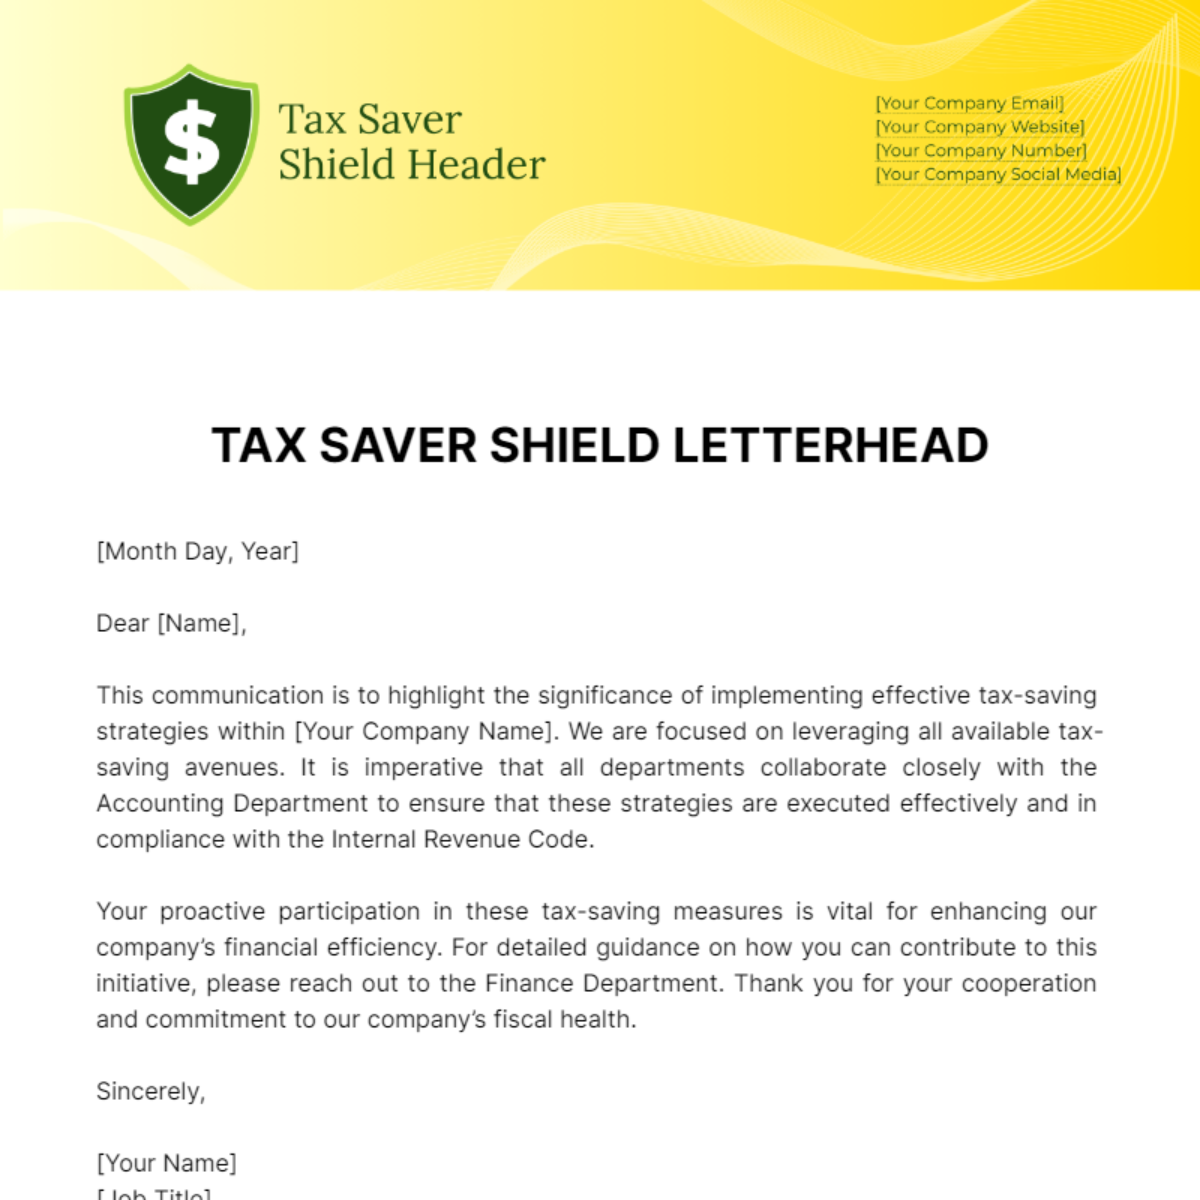 Tax Saver Shield Letterhead Template